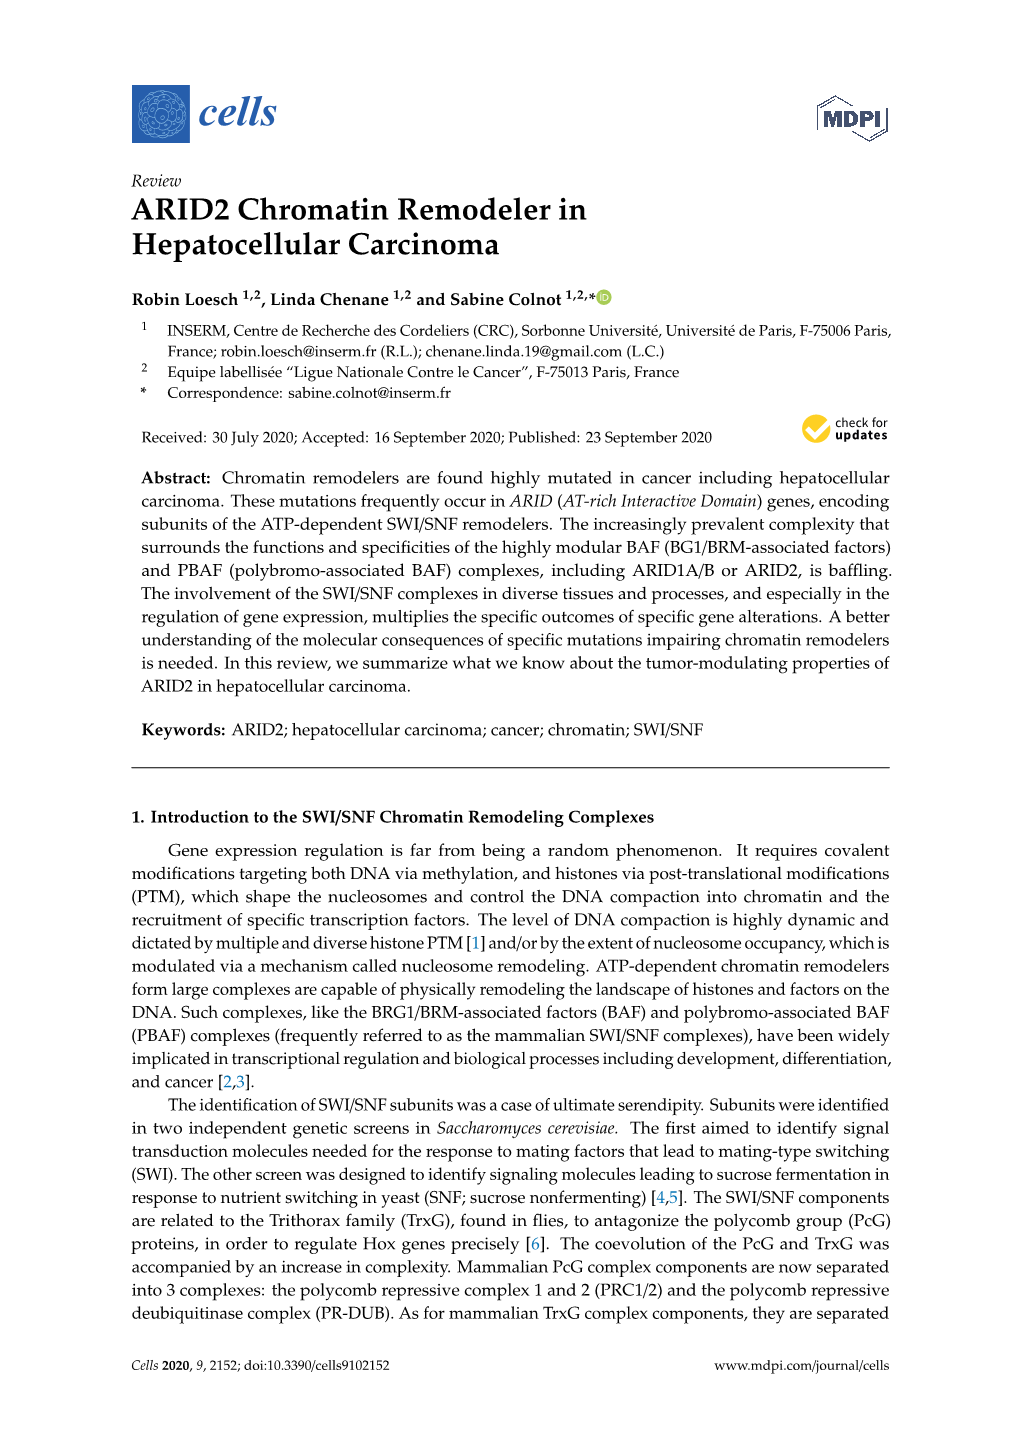 ARID2 Chromatin Remodeler in Hepatocellular Carcinoma